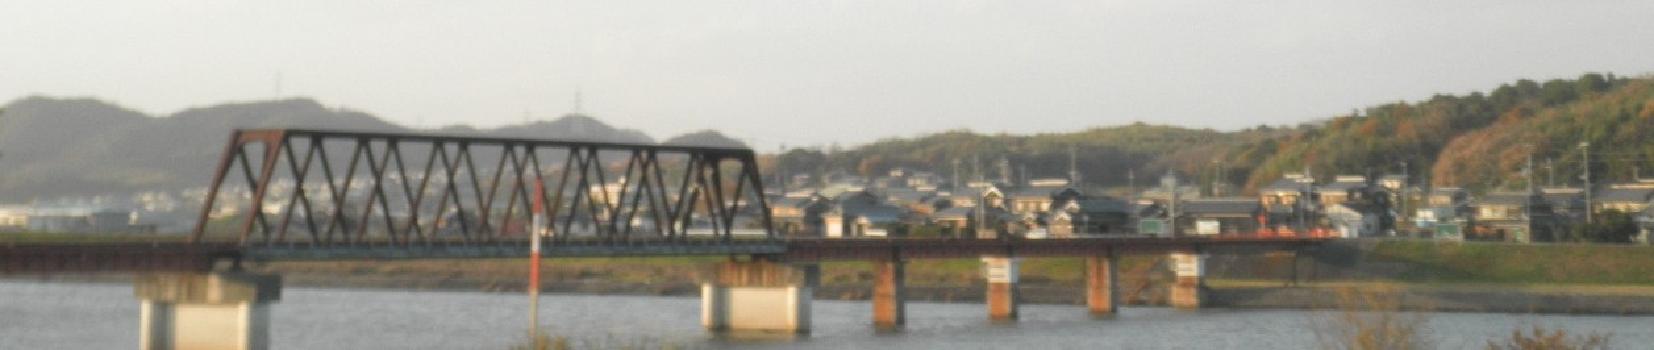 JR Kakogawa Line Kakogawa bridge